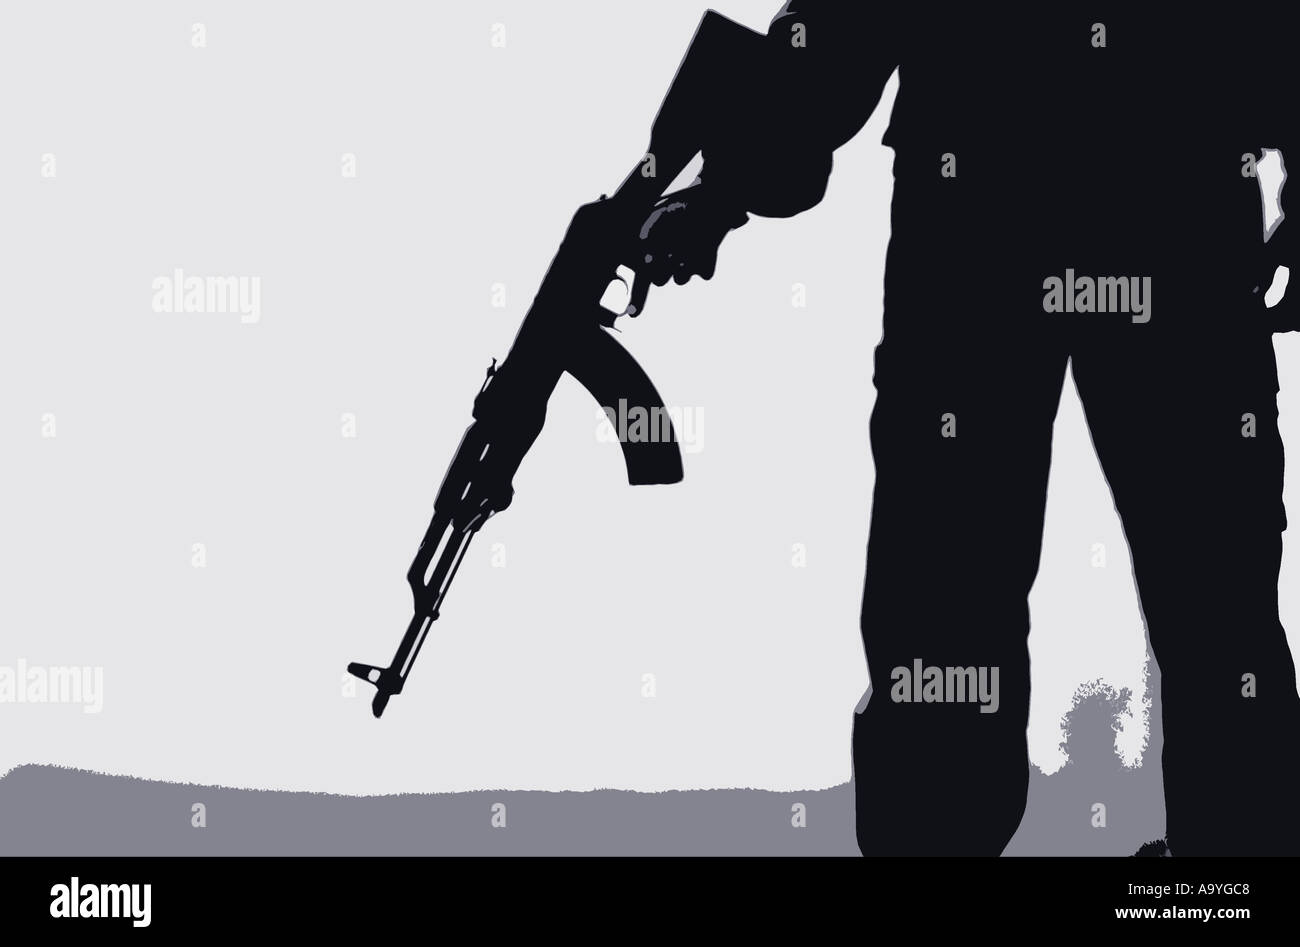 illustration of a man holding a kalashnikov ak47 assault rifle Stock Photo